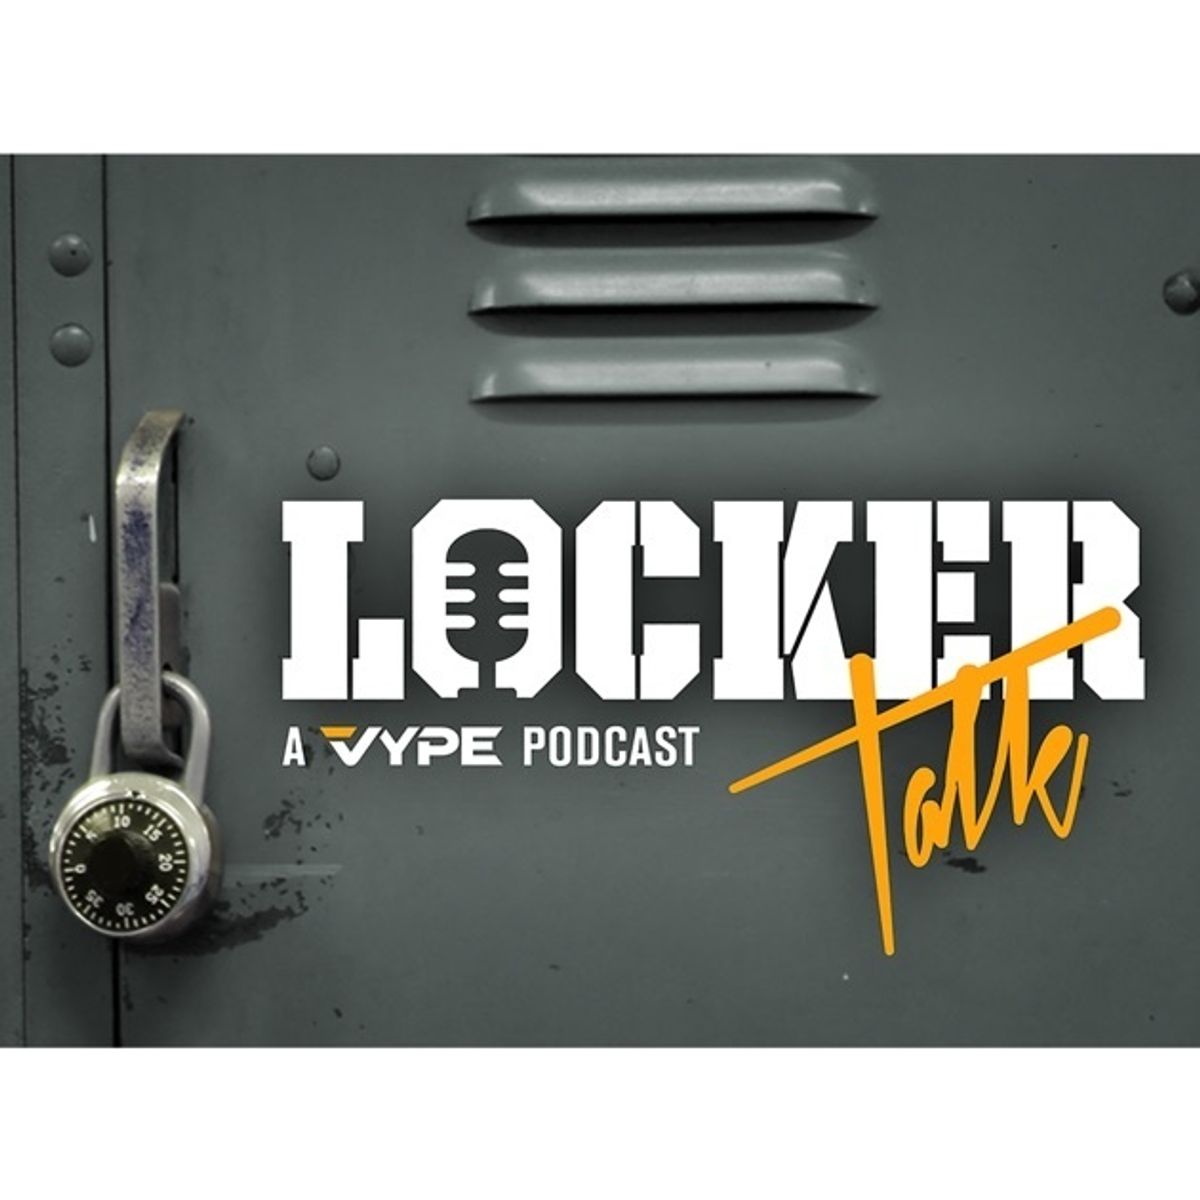 Locker talk: Kube 57's Todd Freed